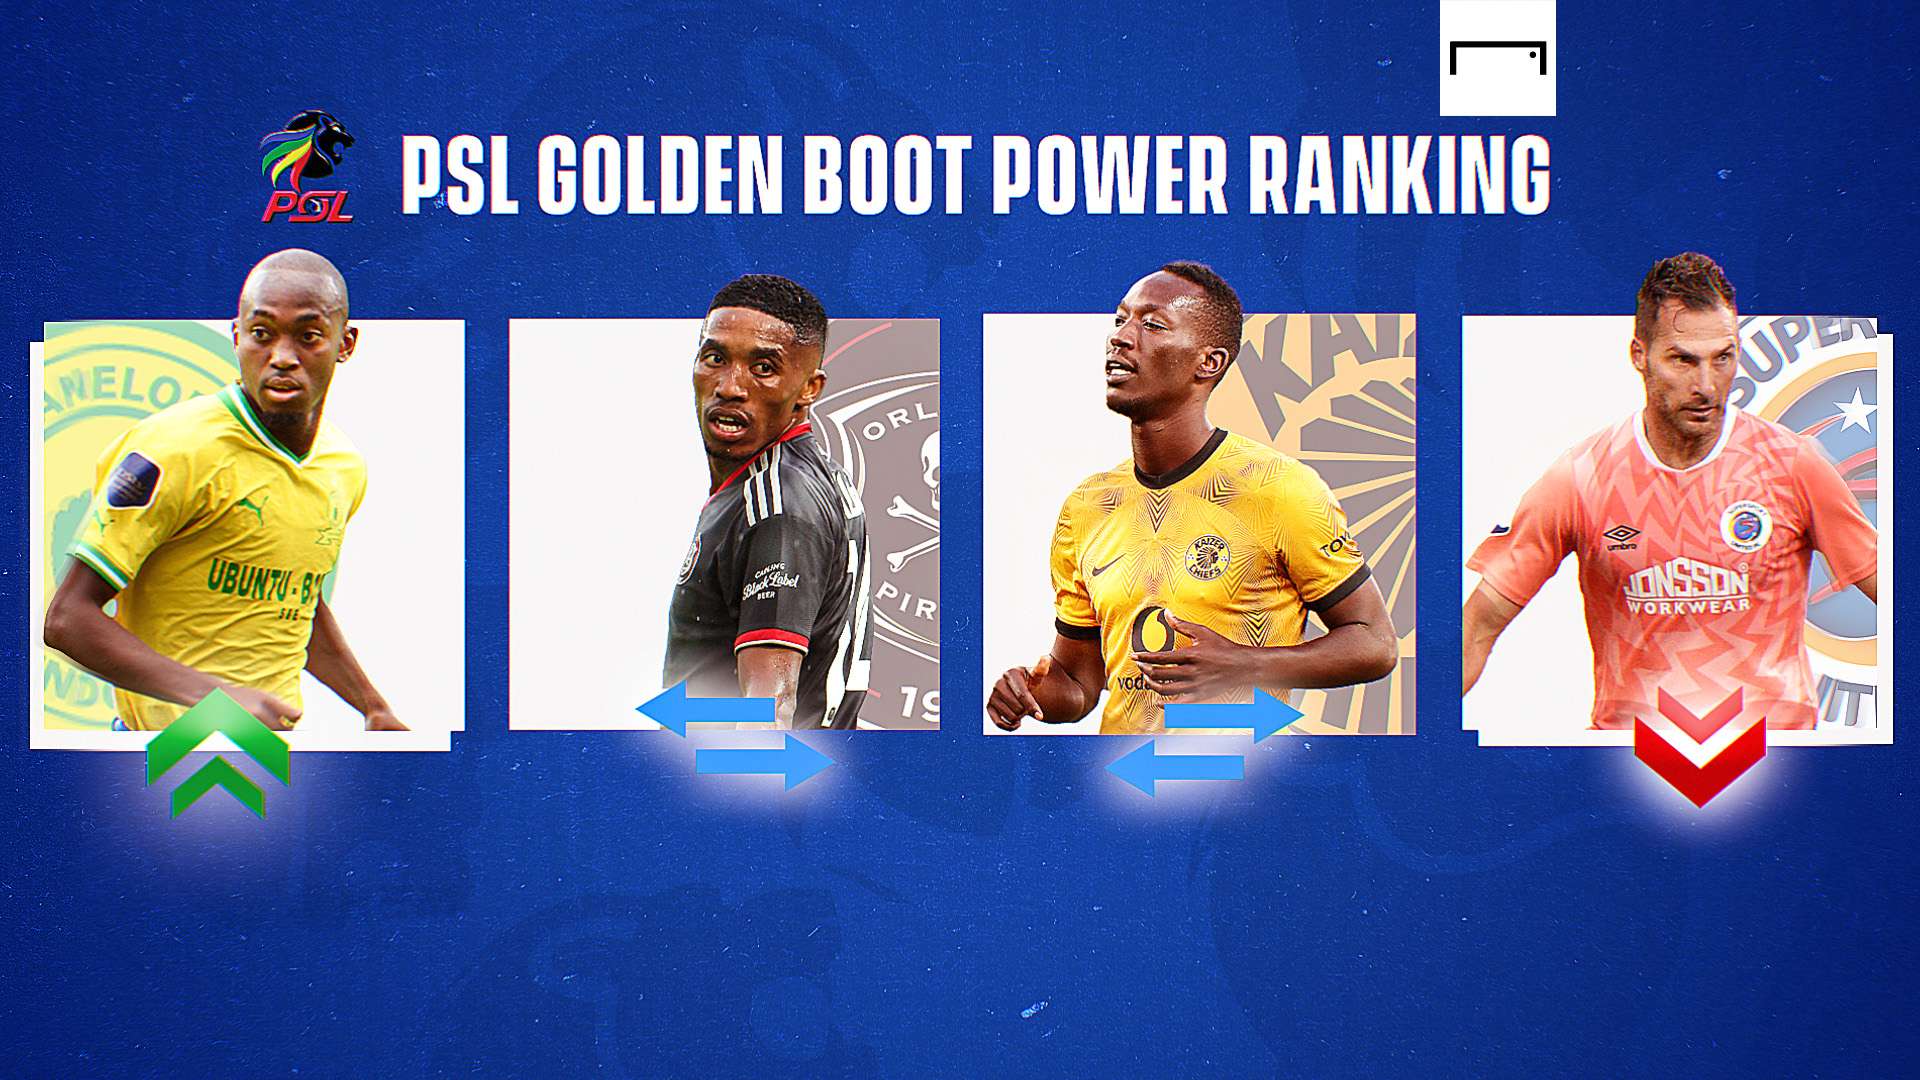 PSL Golden Boot Power Ranking